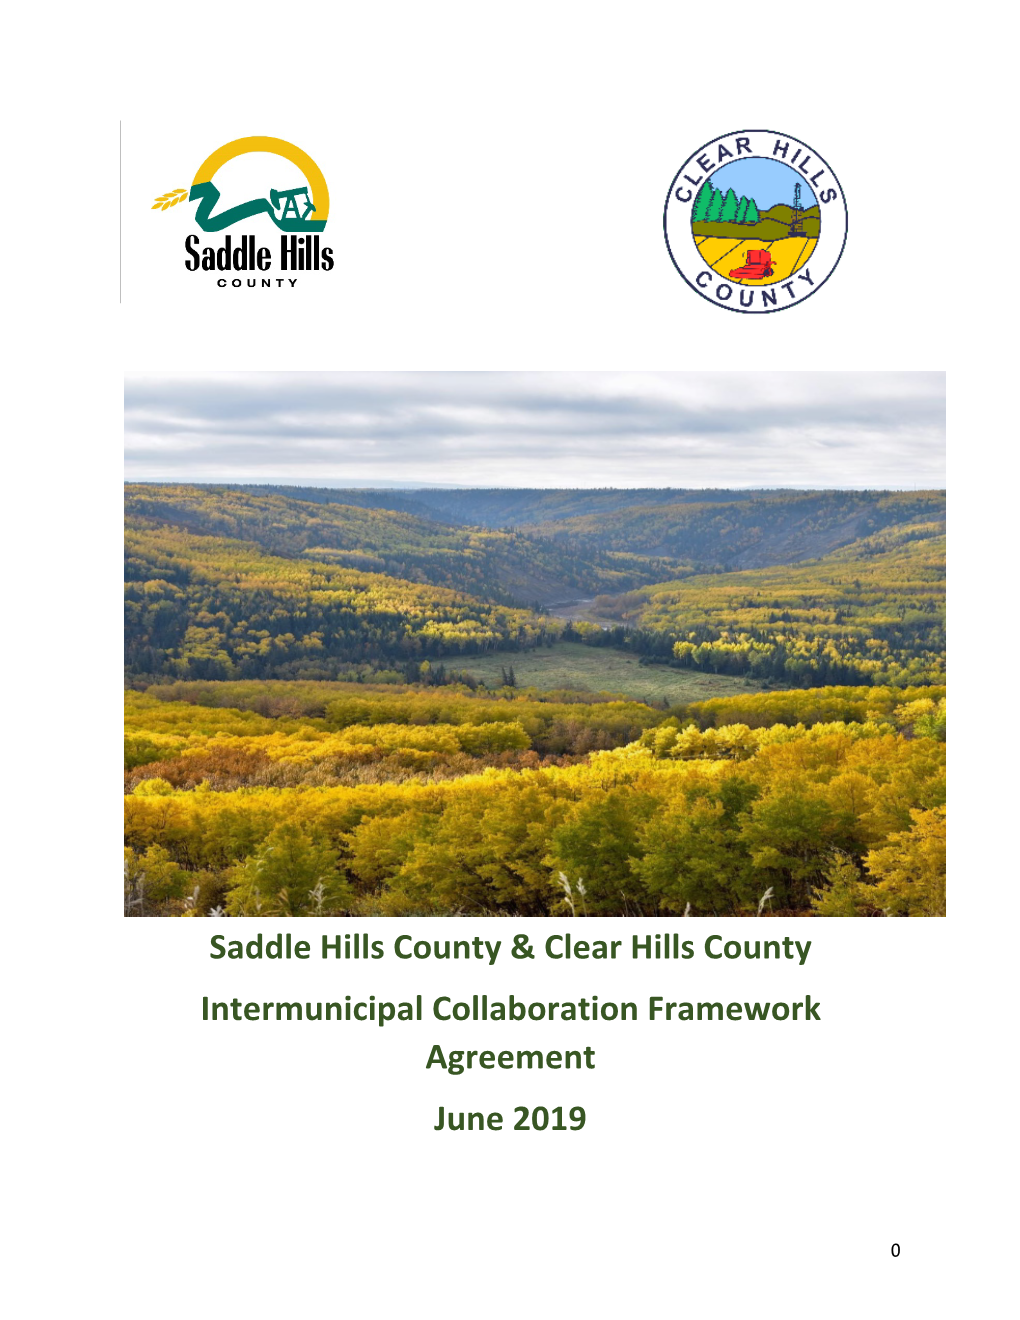 Clear Hills County Intermunicipal Collaboration Framework Agreement June 2019